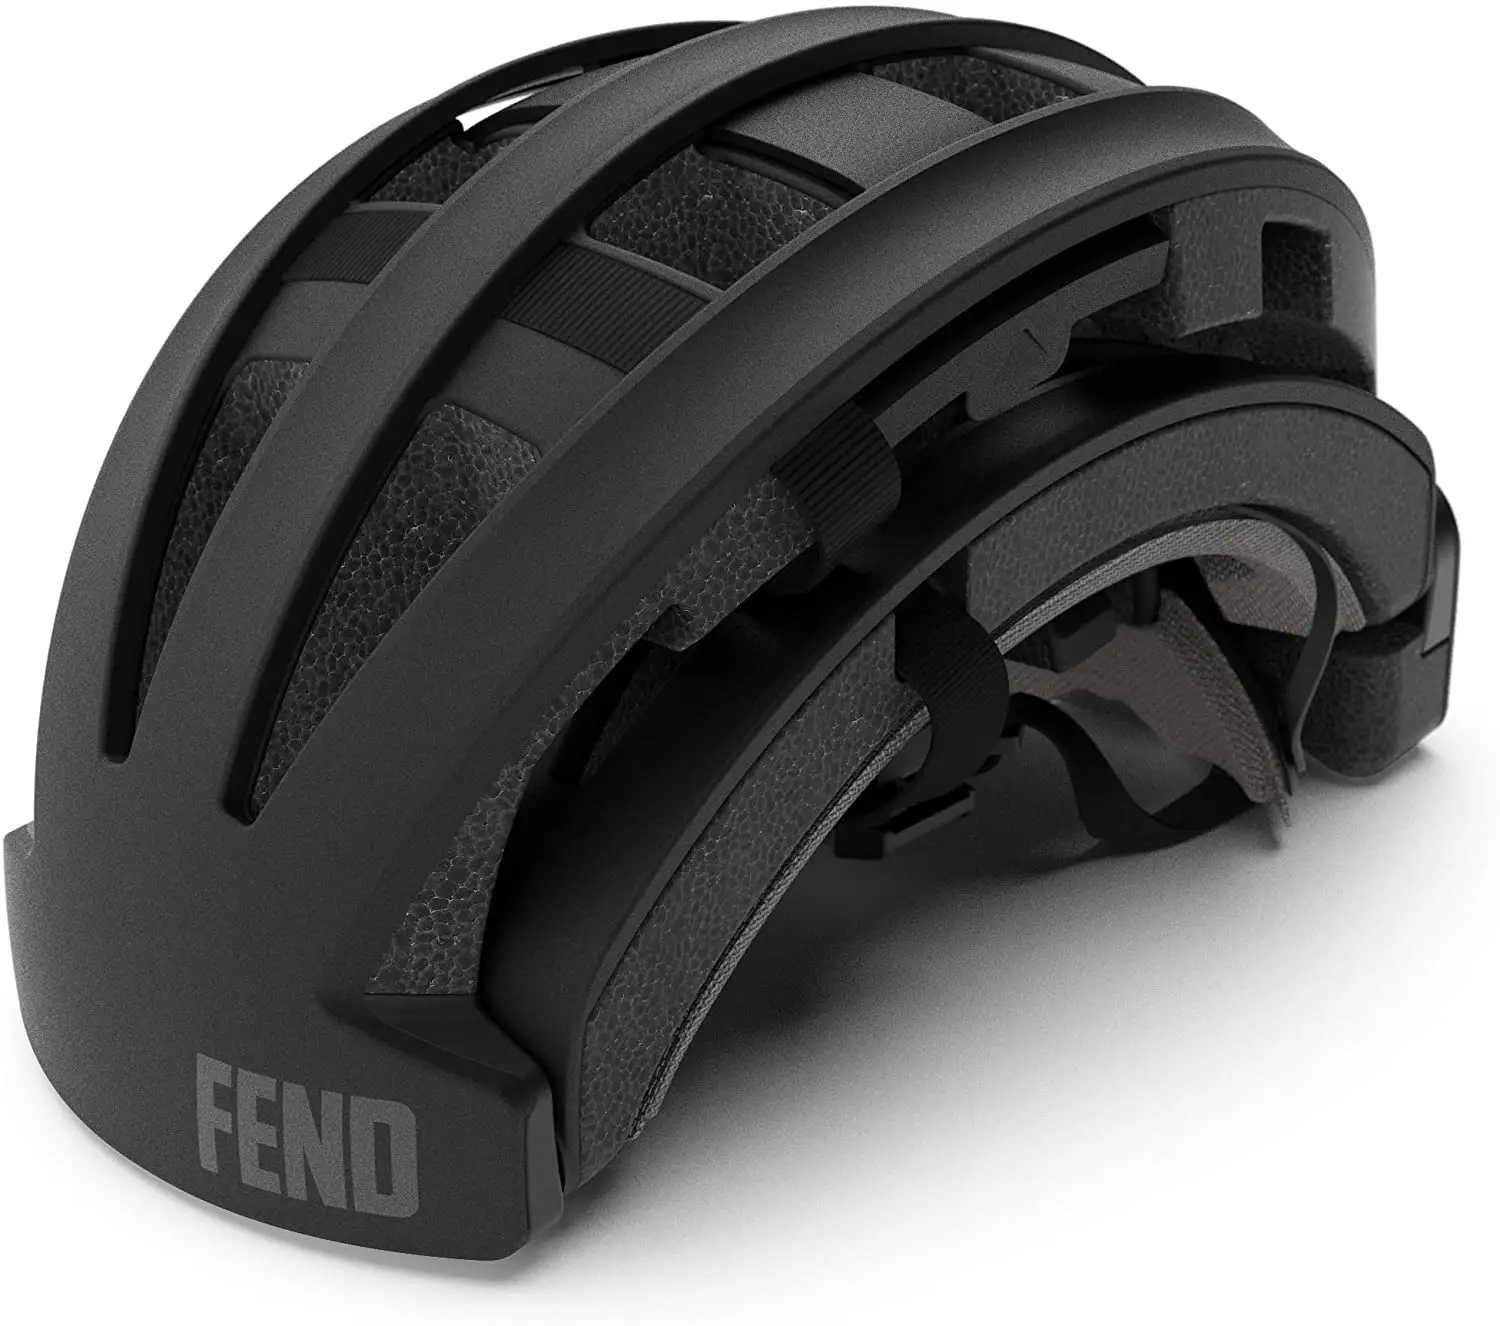 fend foldable bike helmet isolated on white background